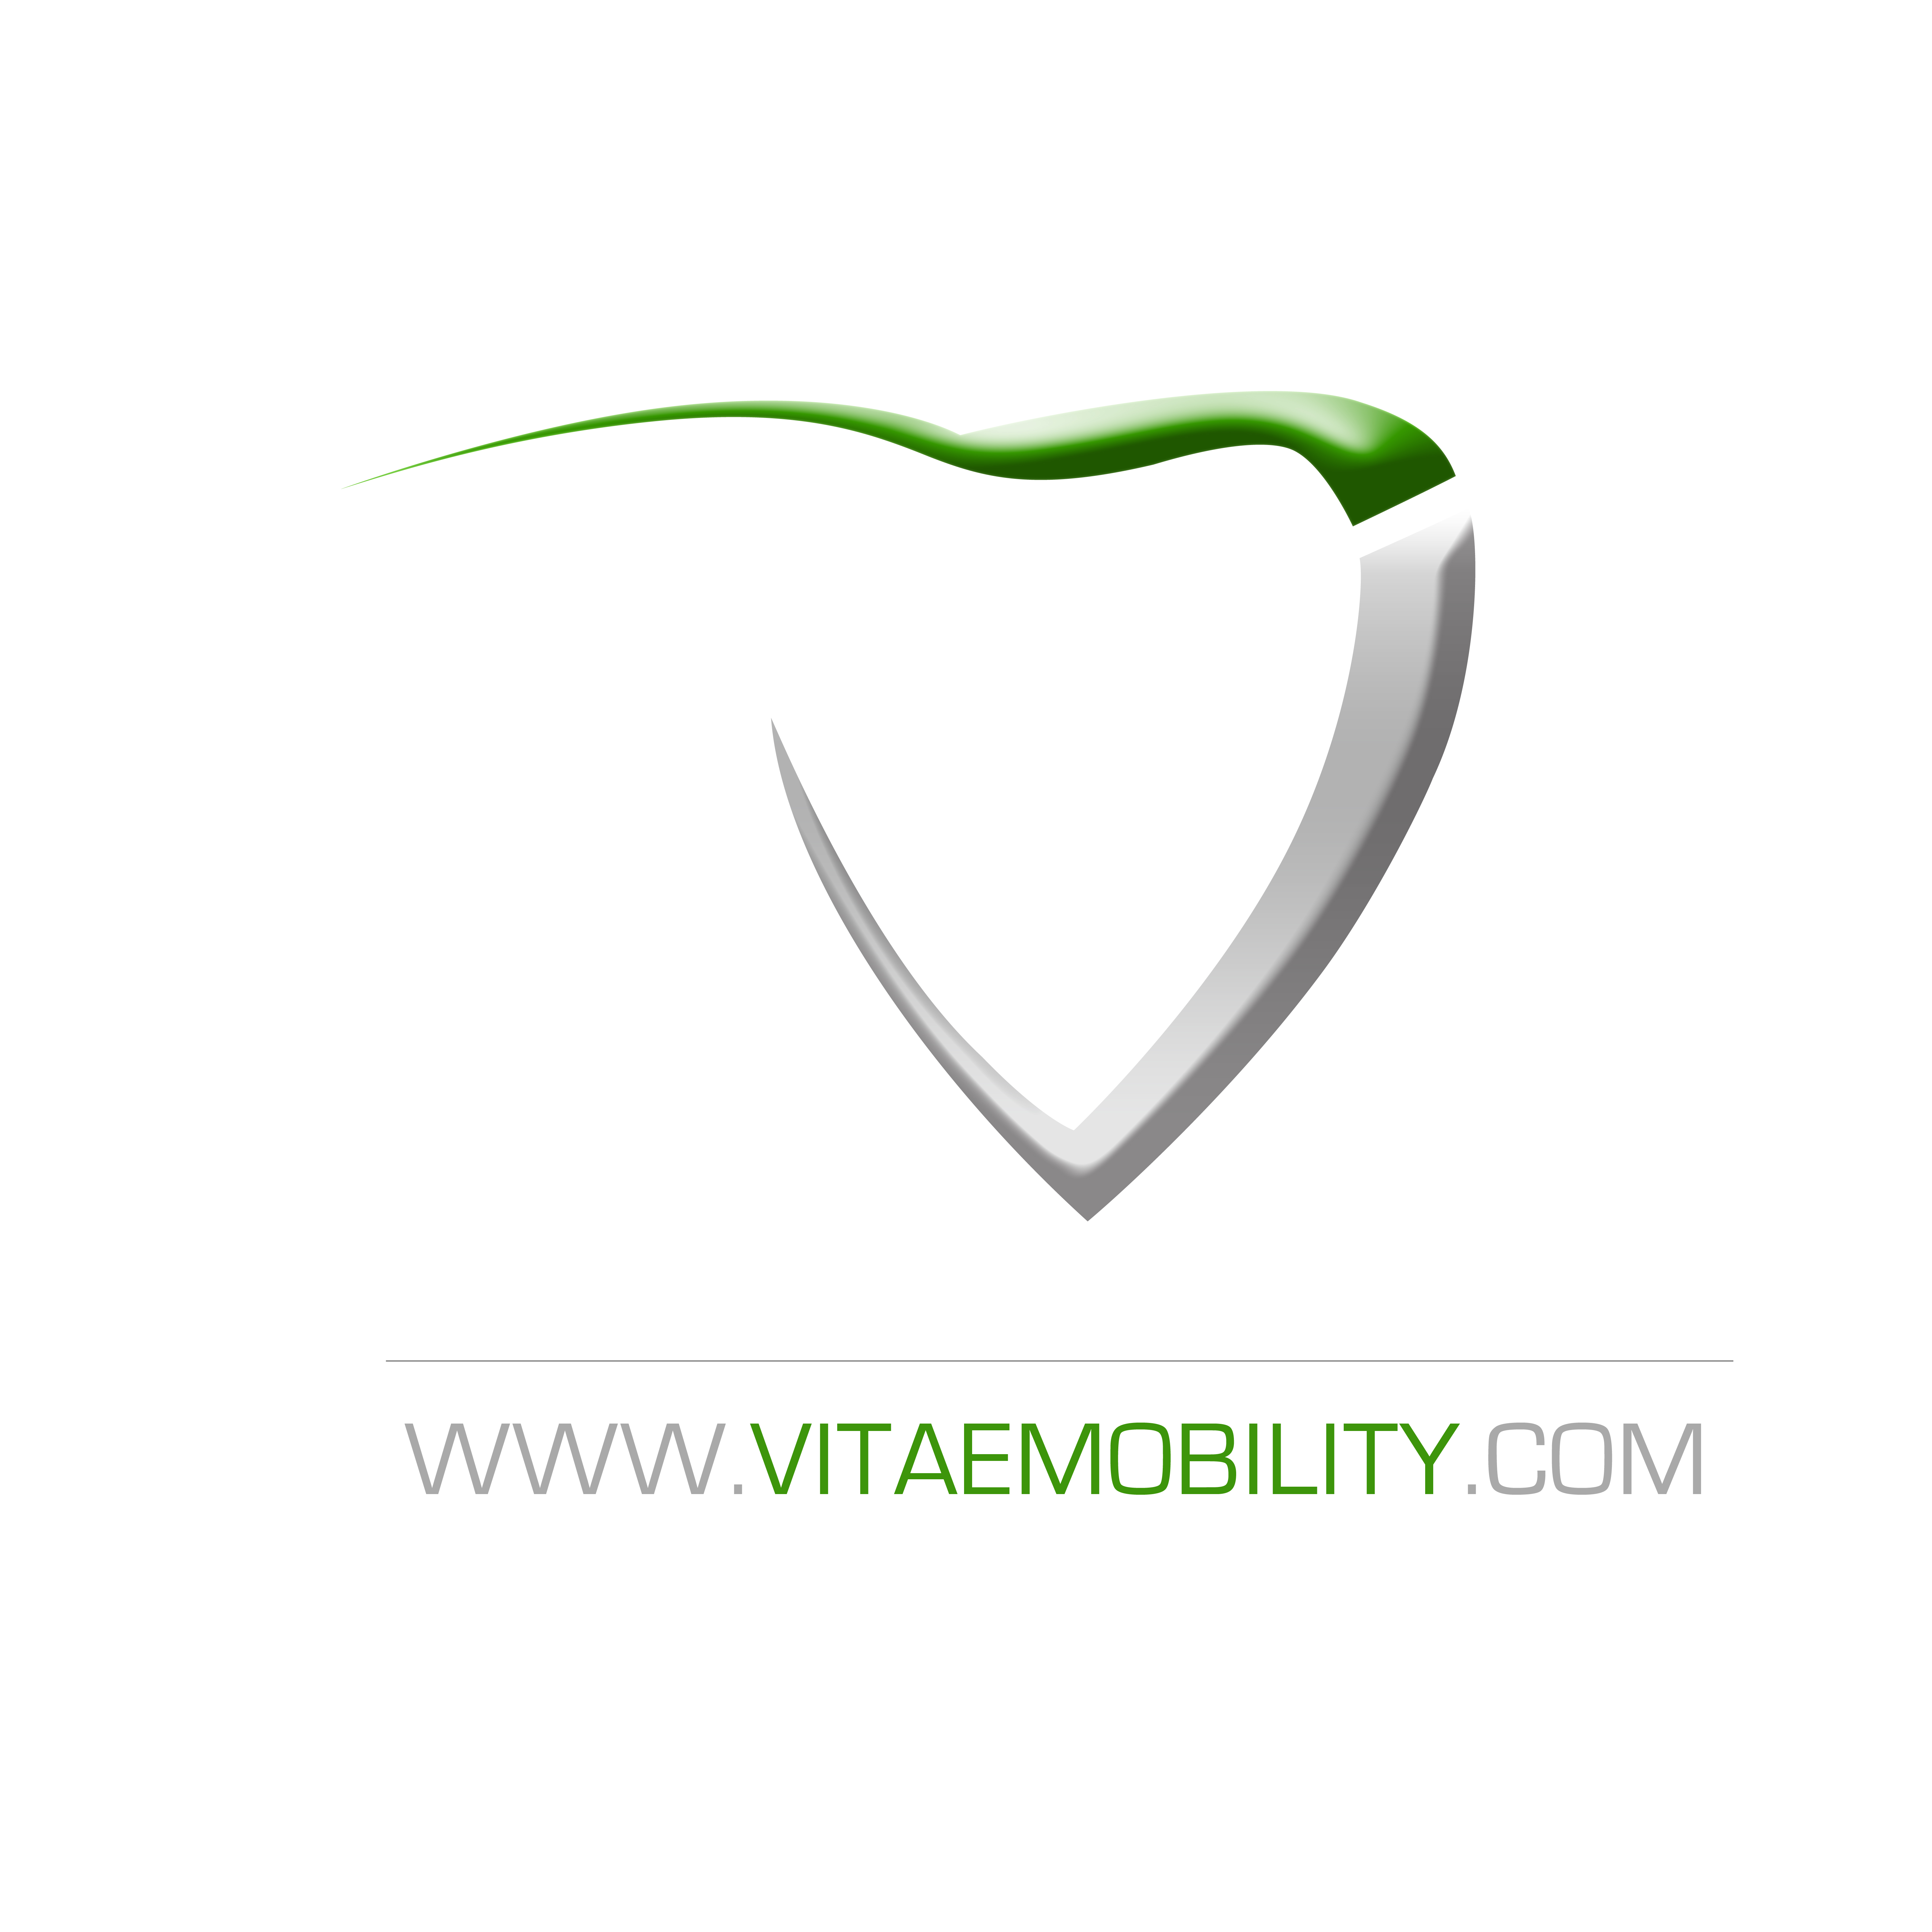 VitaeMobility_line_onwhite.jpg